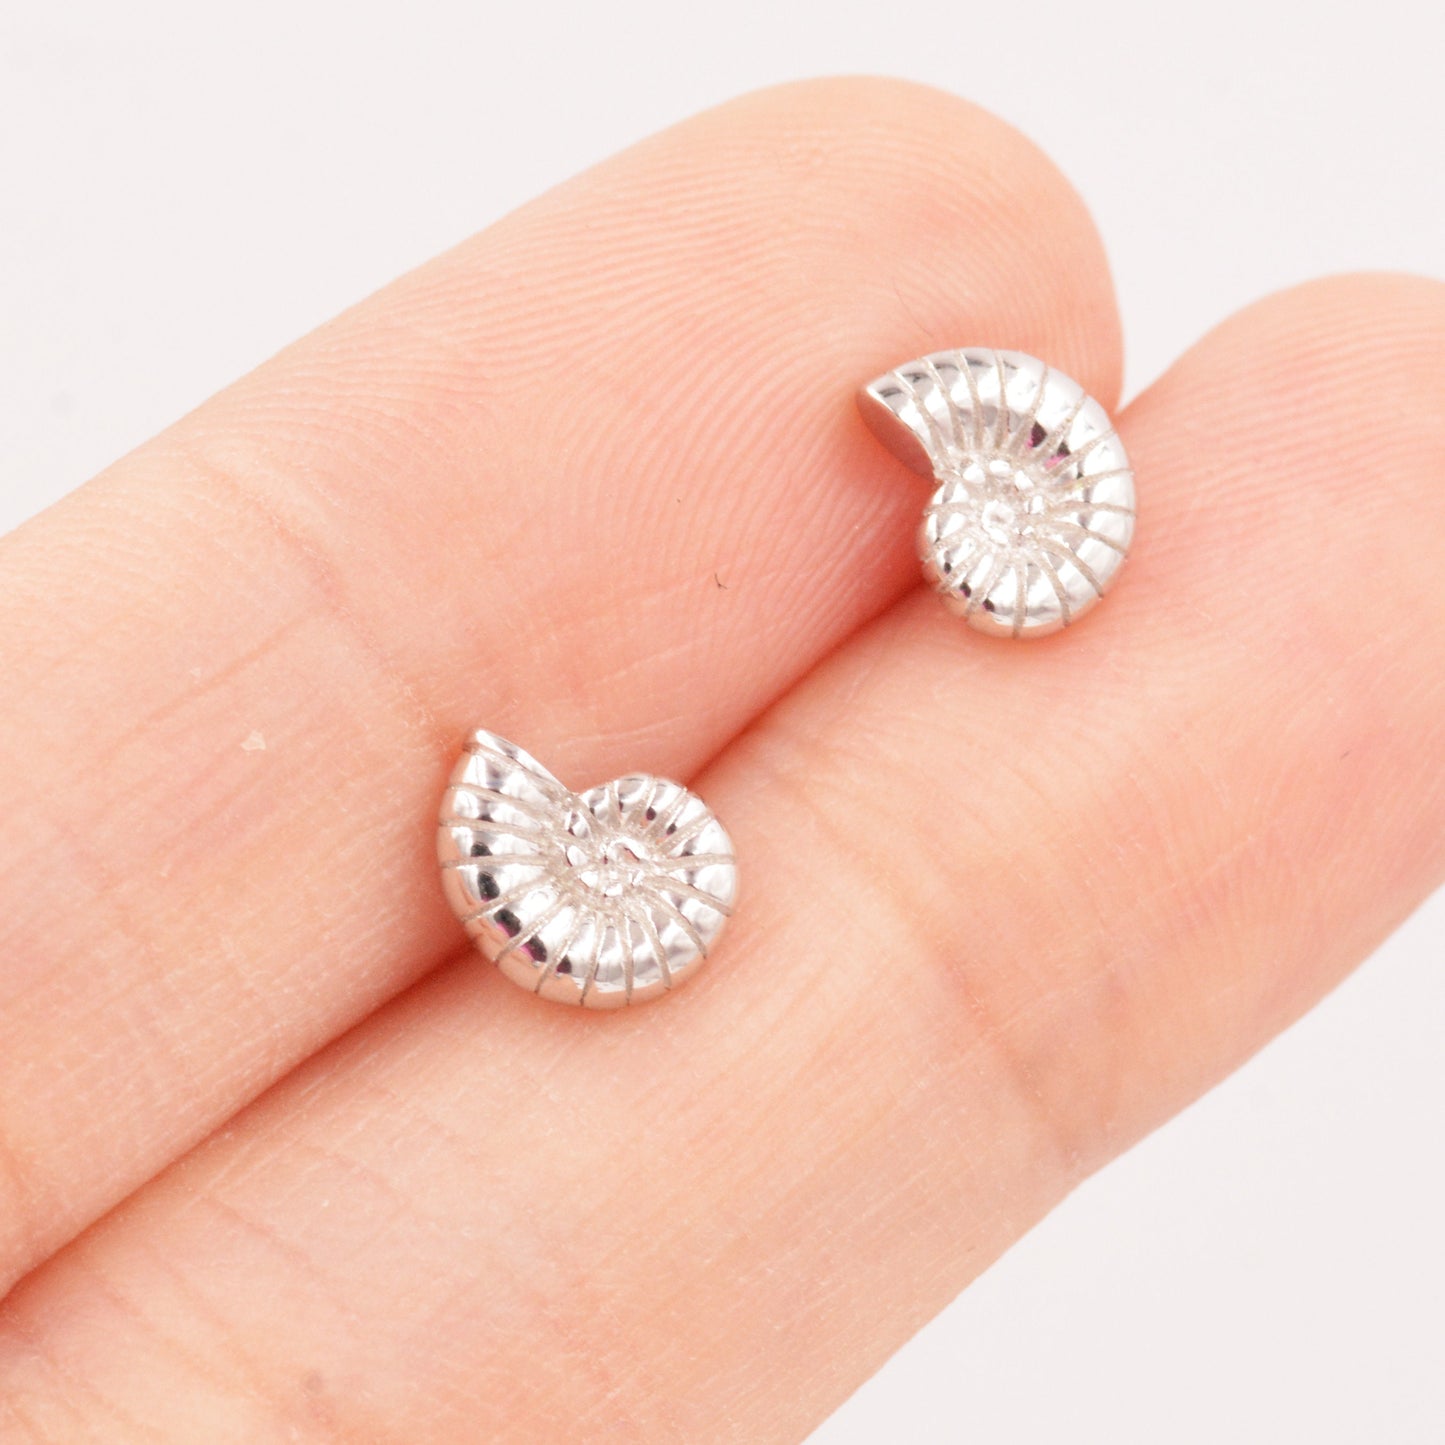 Sterling Silver Ammonite Shell Stud Earrings - Cute   Fun, Whimsical - Sea Ocean Theme - Nature Inspired